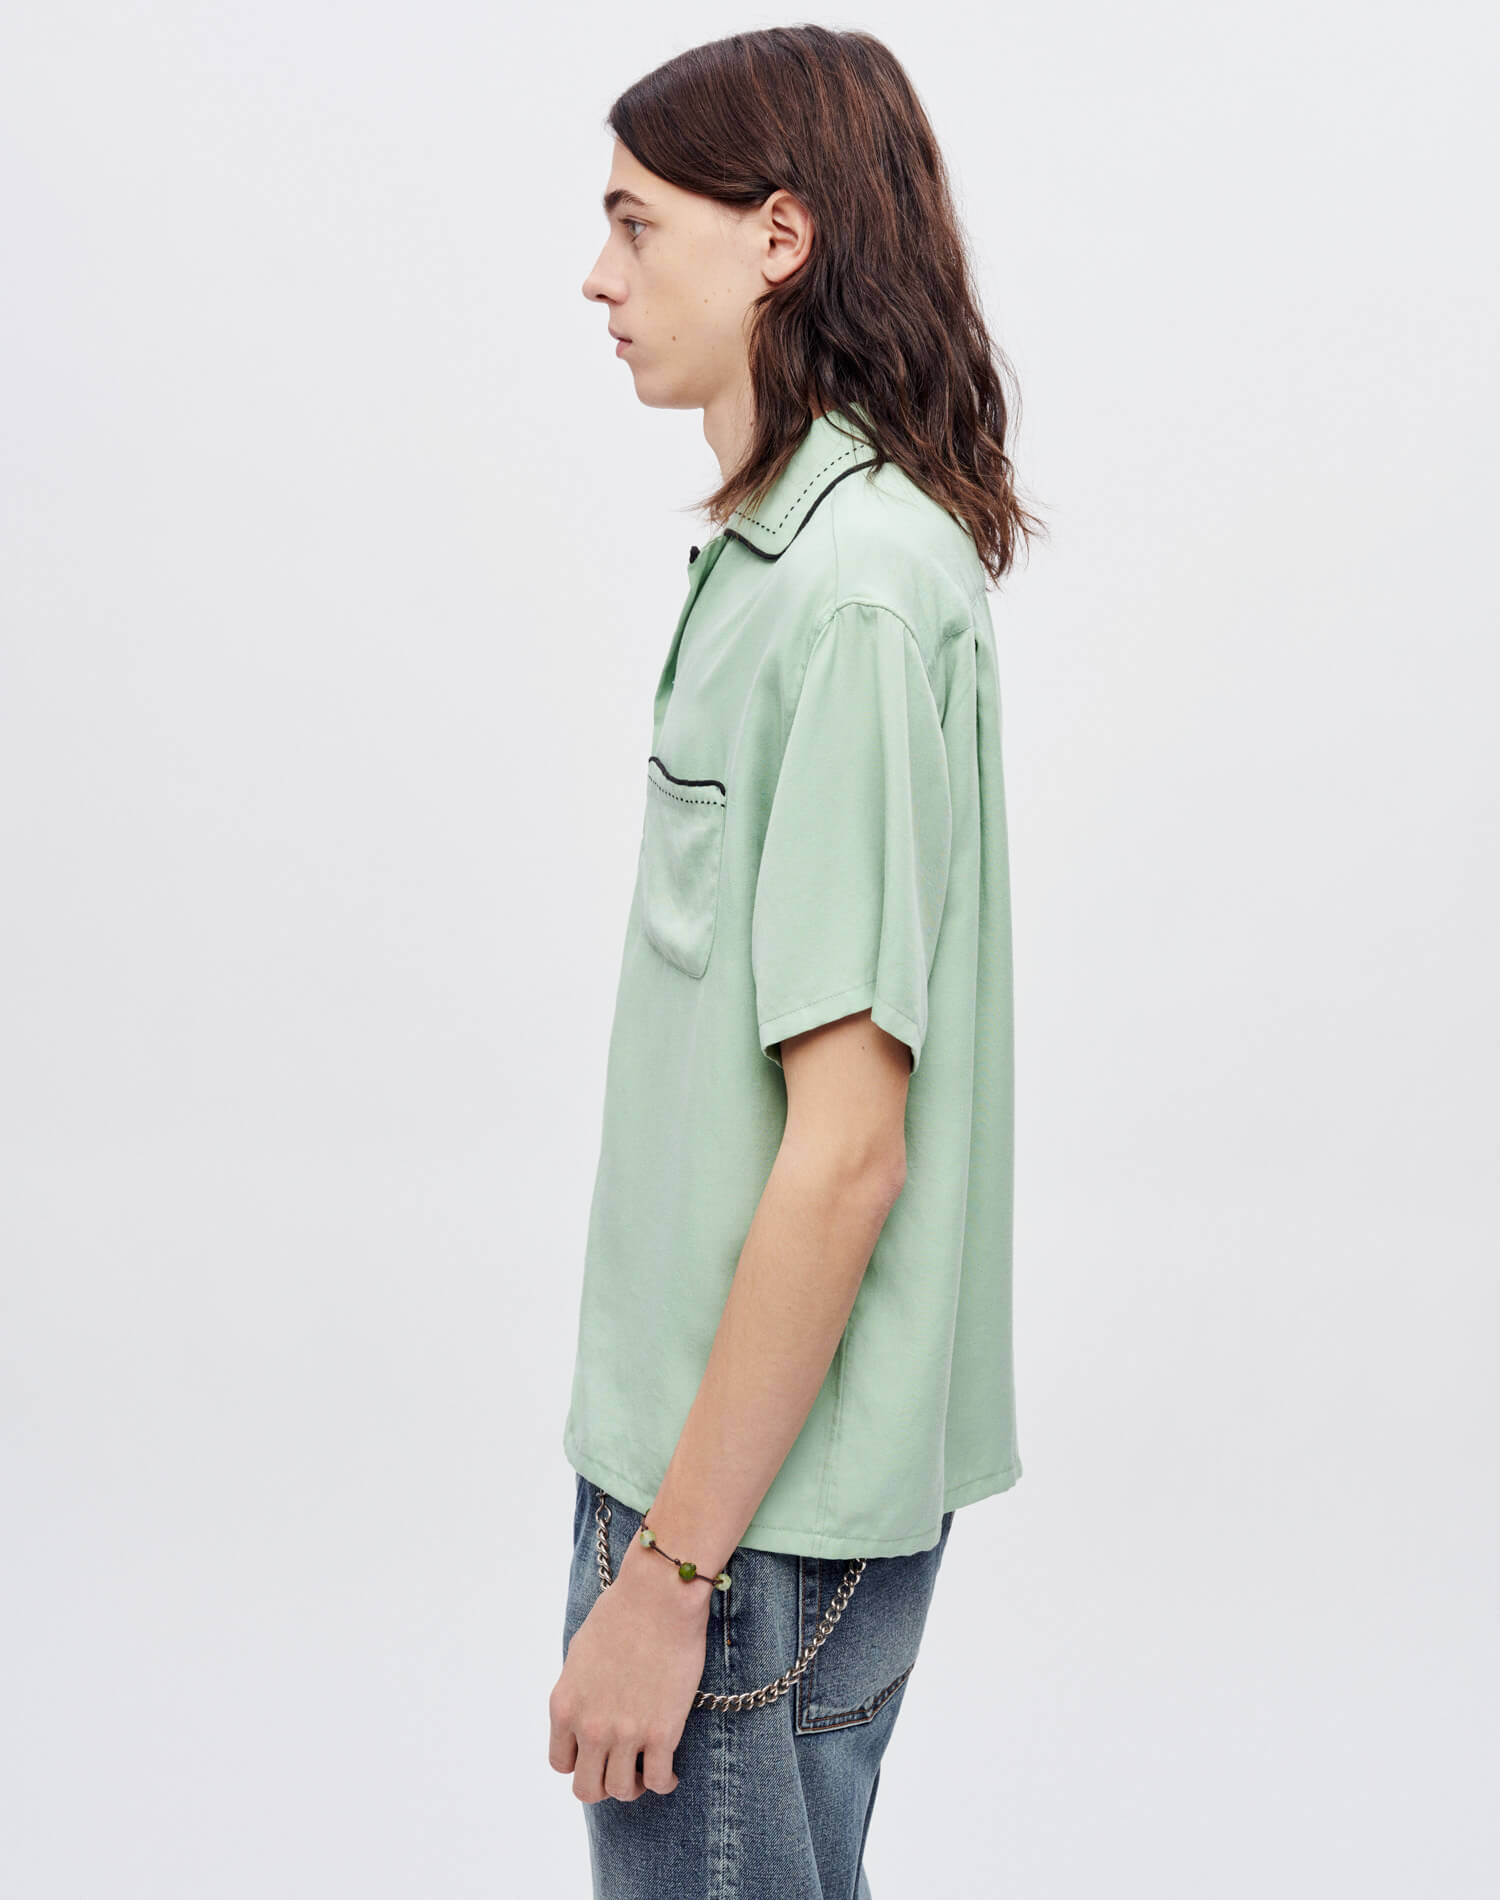 Sashiko Bowling Shirt - Pale Green